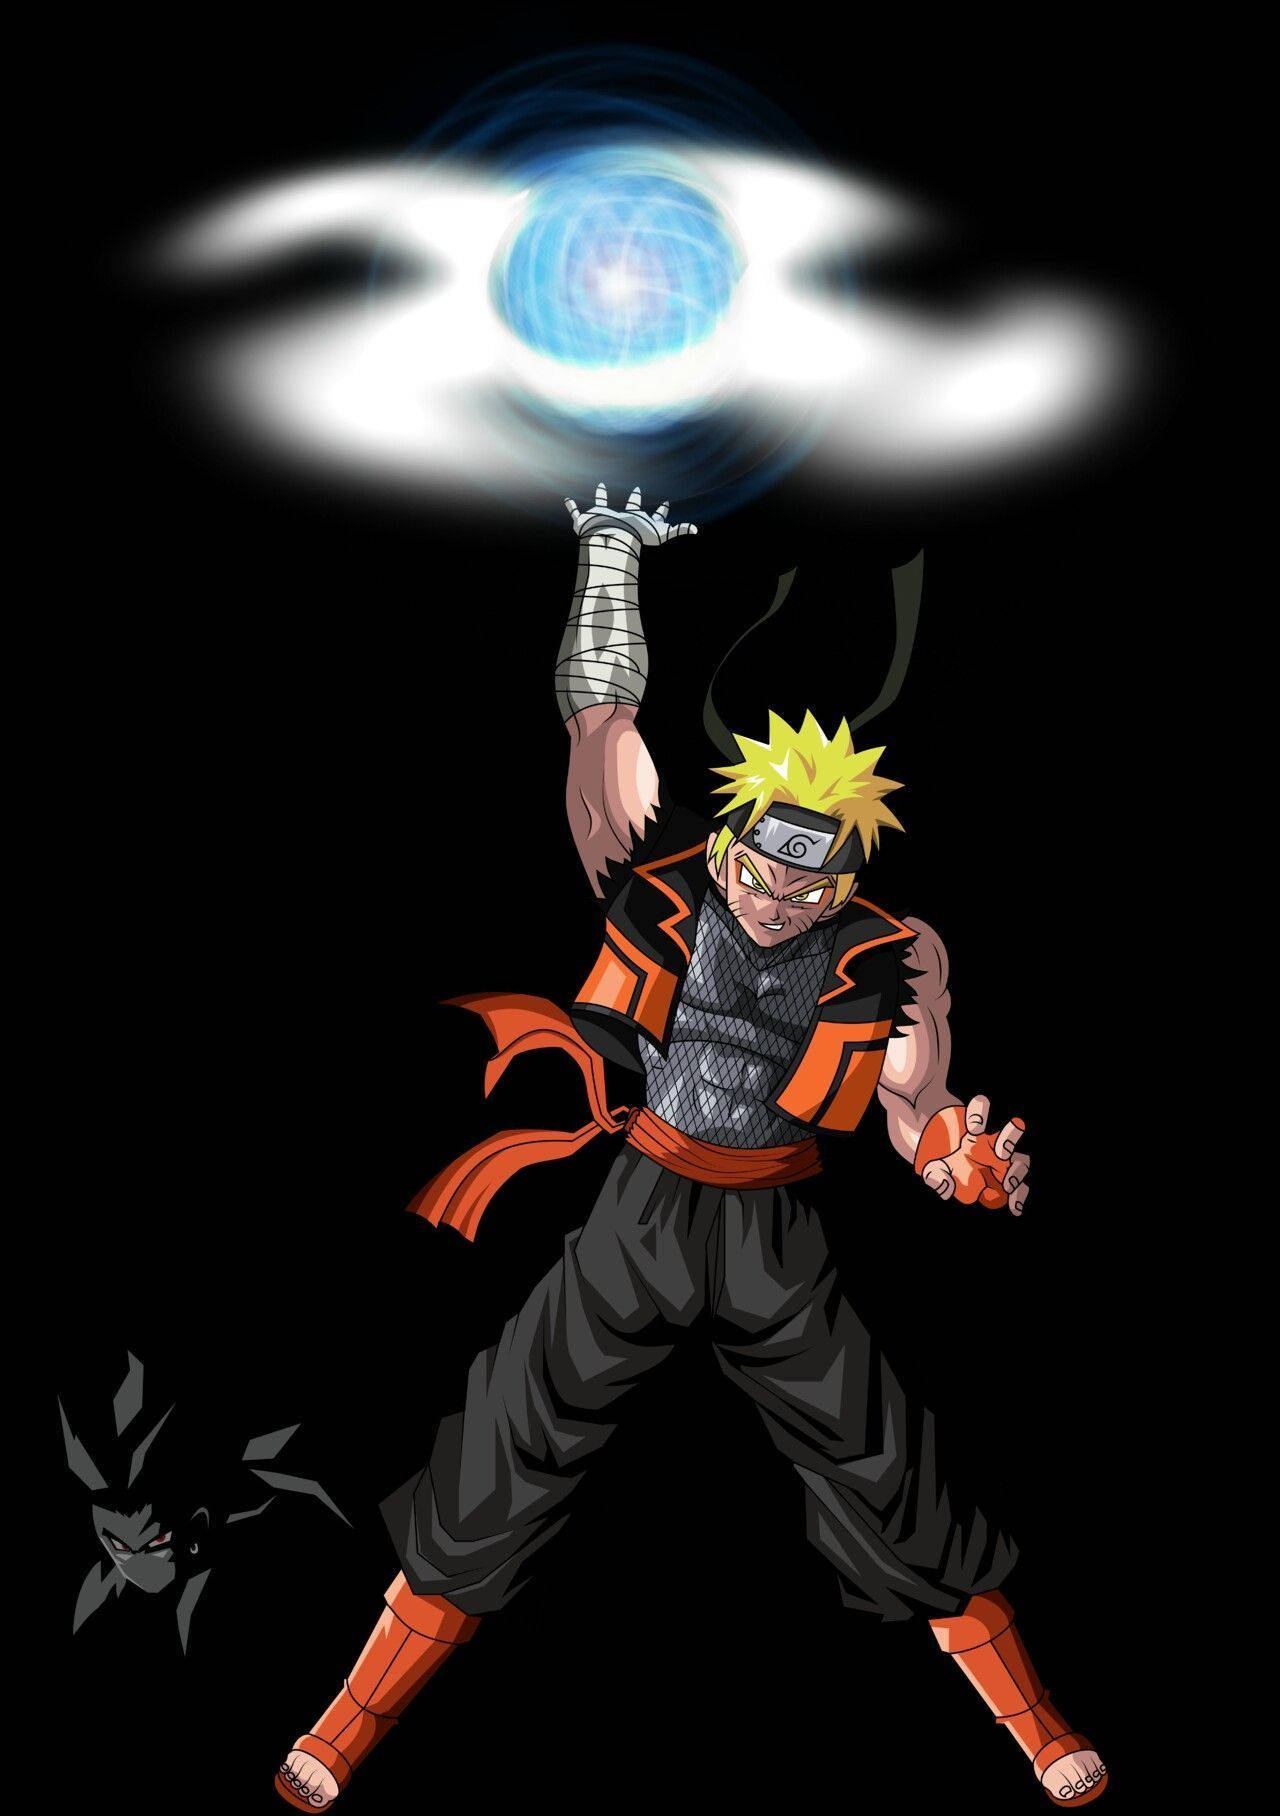 Naruto ser cool ud i Gucci lilla. Wallpaper